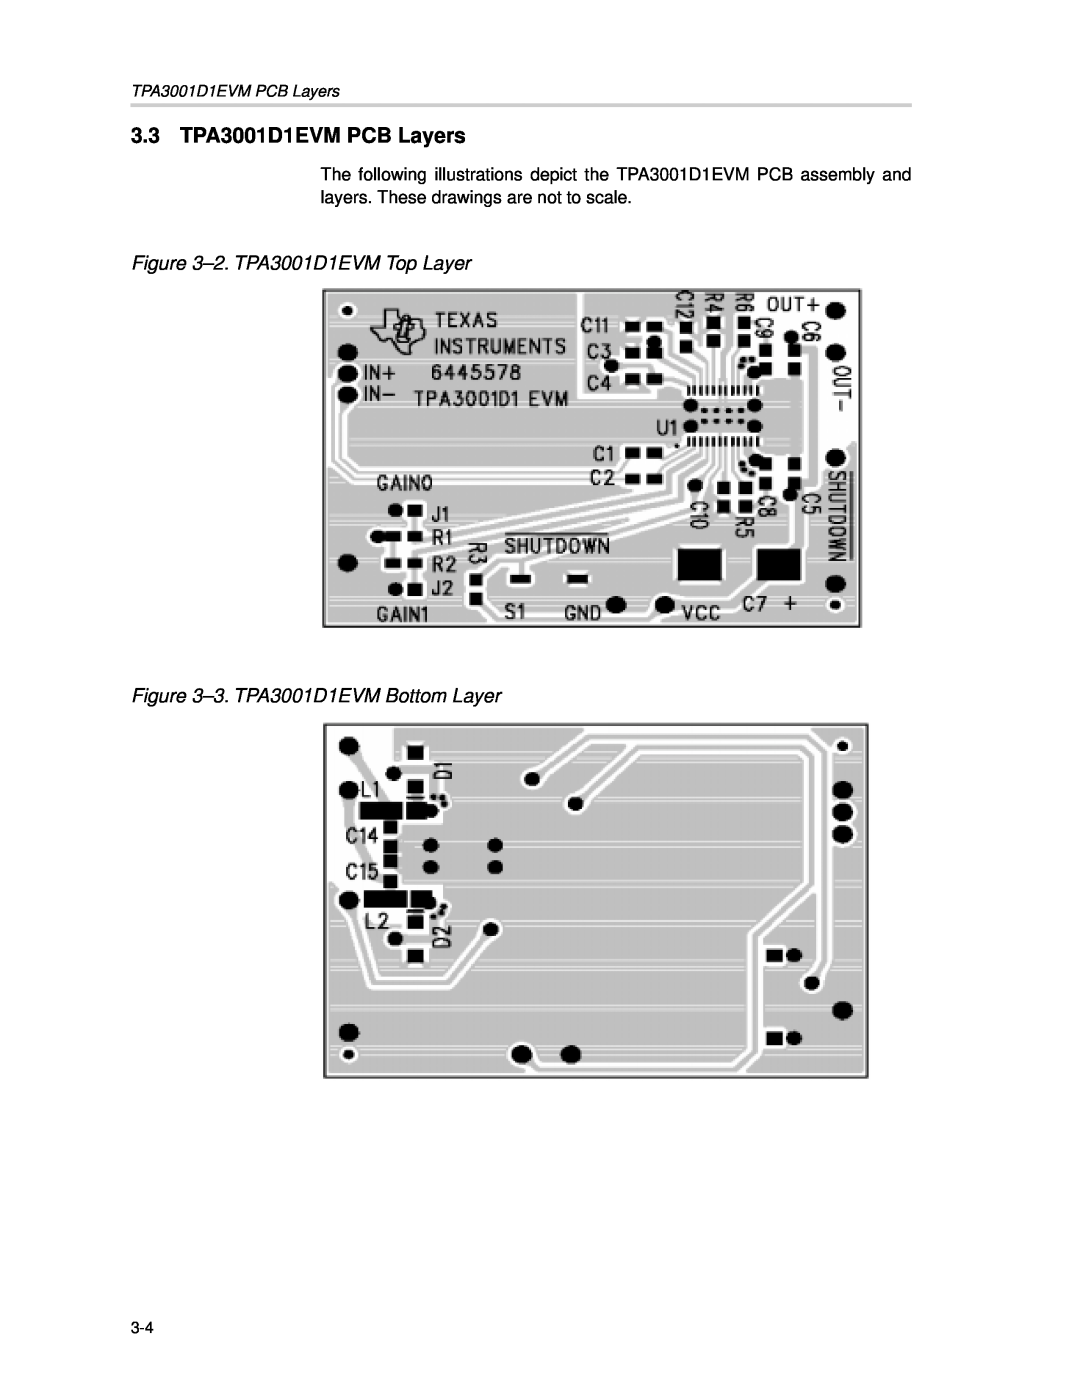 Texas Instruments manual 3.3 TPA3001D1EVM PCB Layers, 2.TPA3001D1EVM Top Layer, 3.TPA3001D1EVM Bottom Layer 